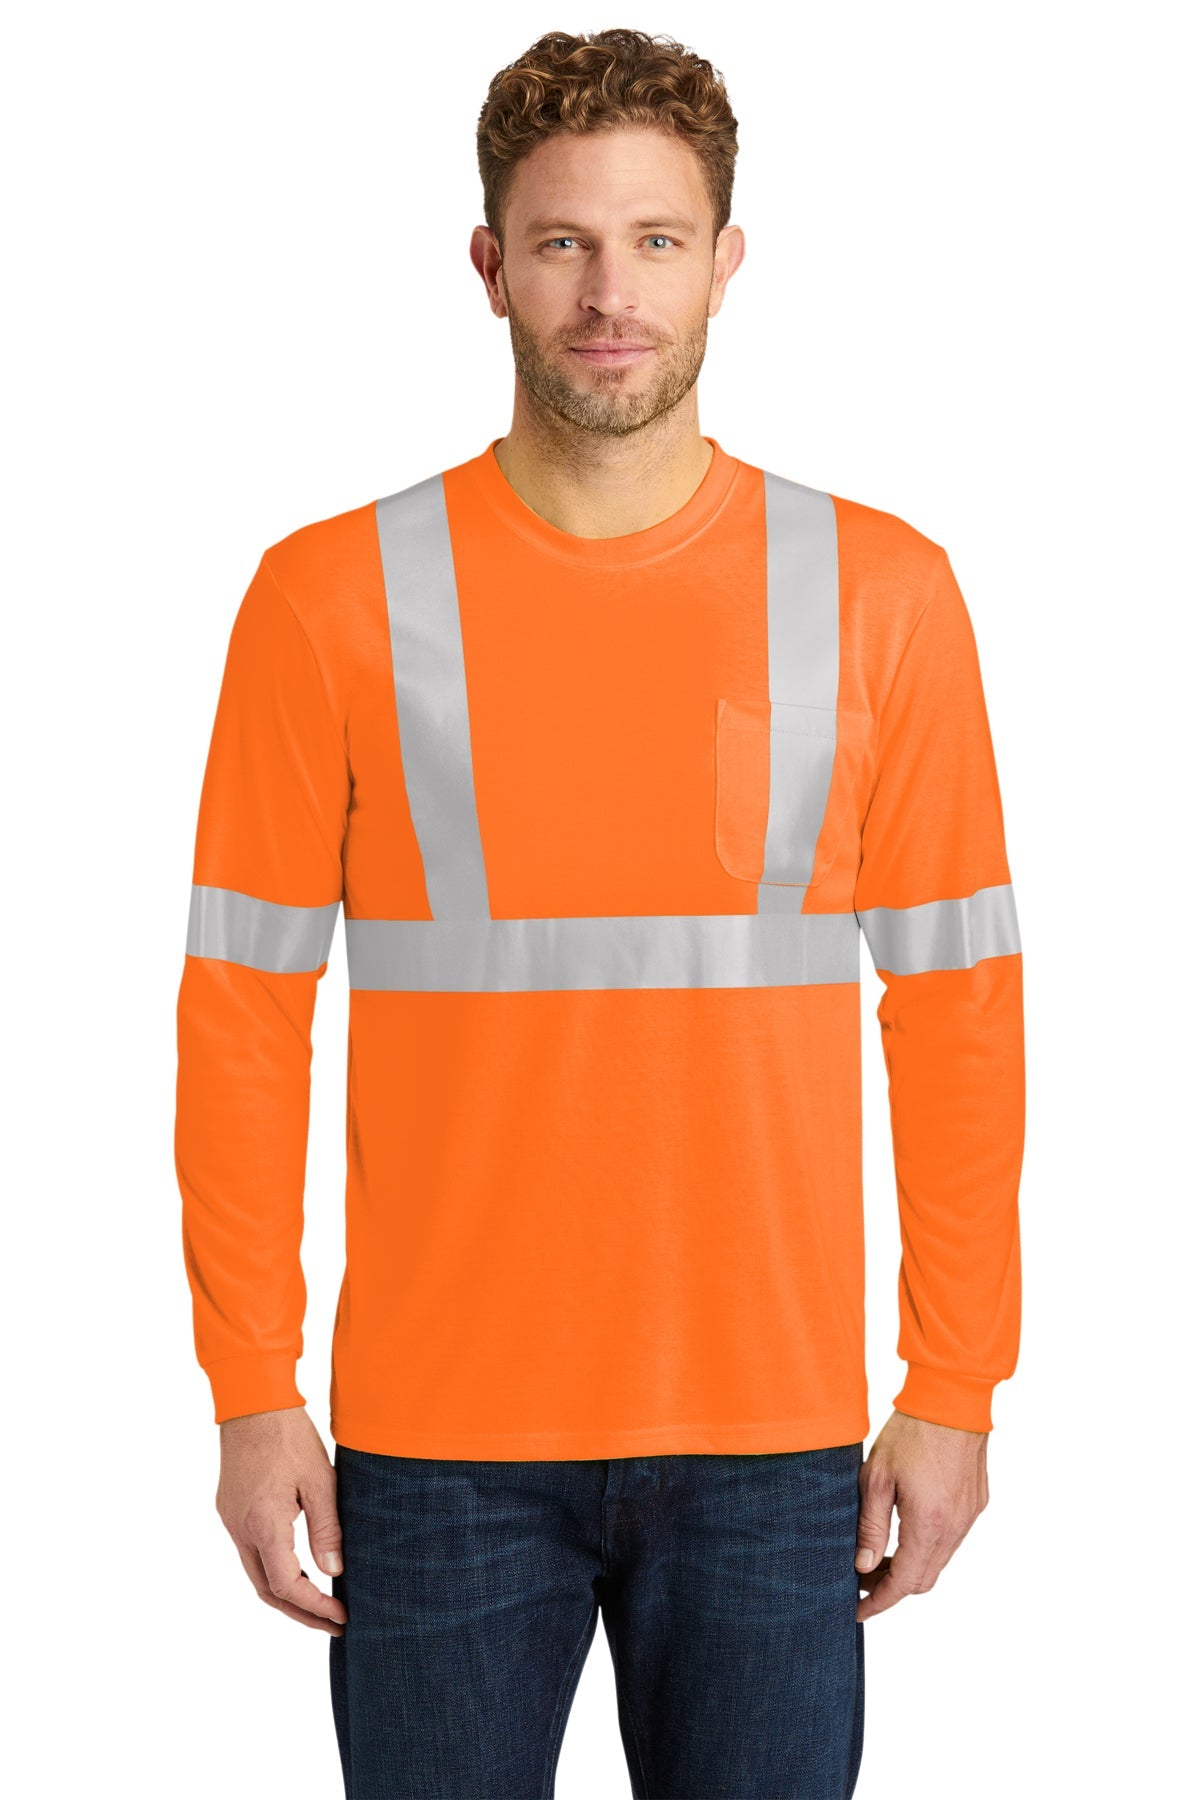 CornerStone ANSI 107 Class 2 Long Sleeve Safety T-Shirt